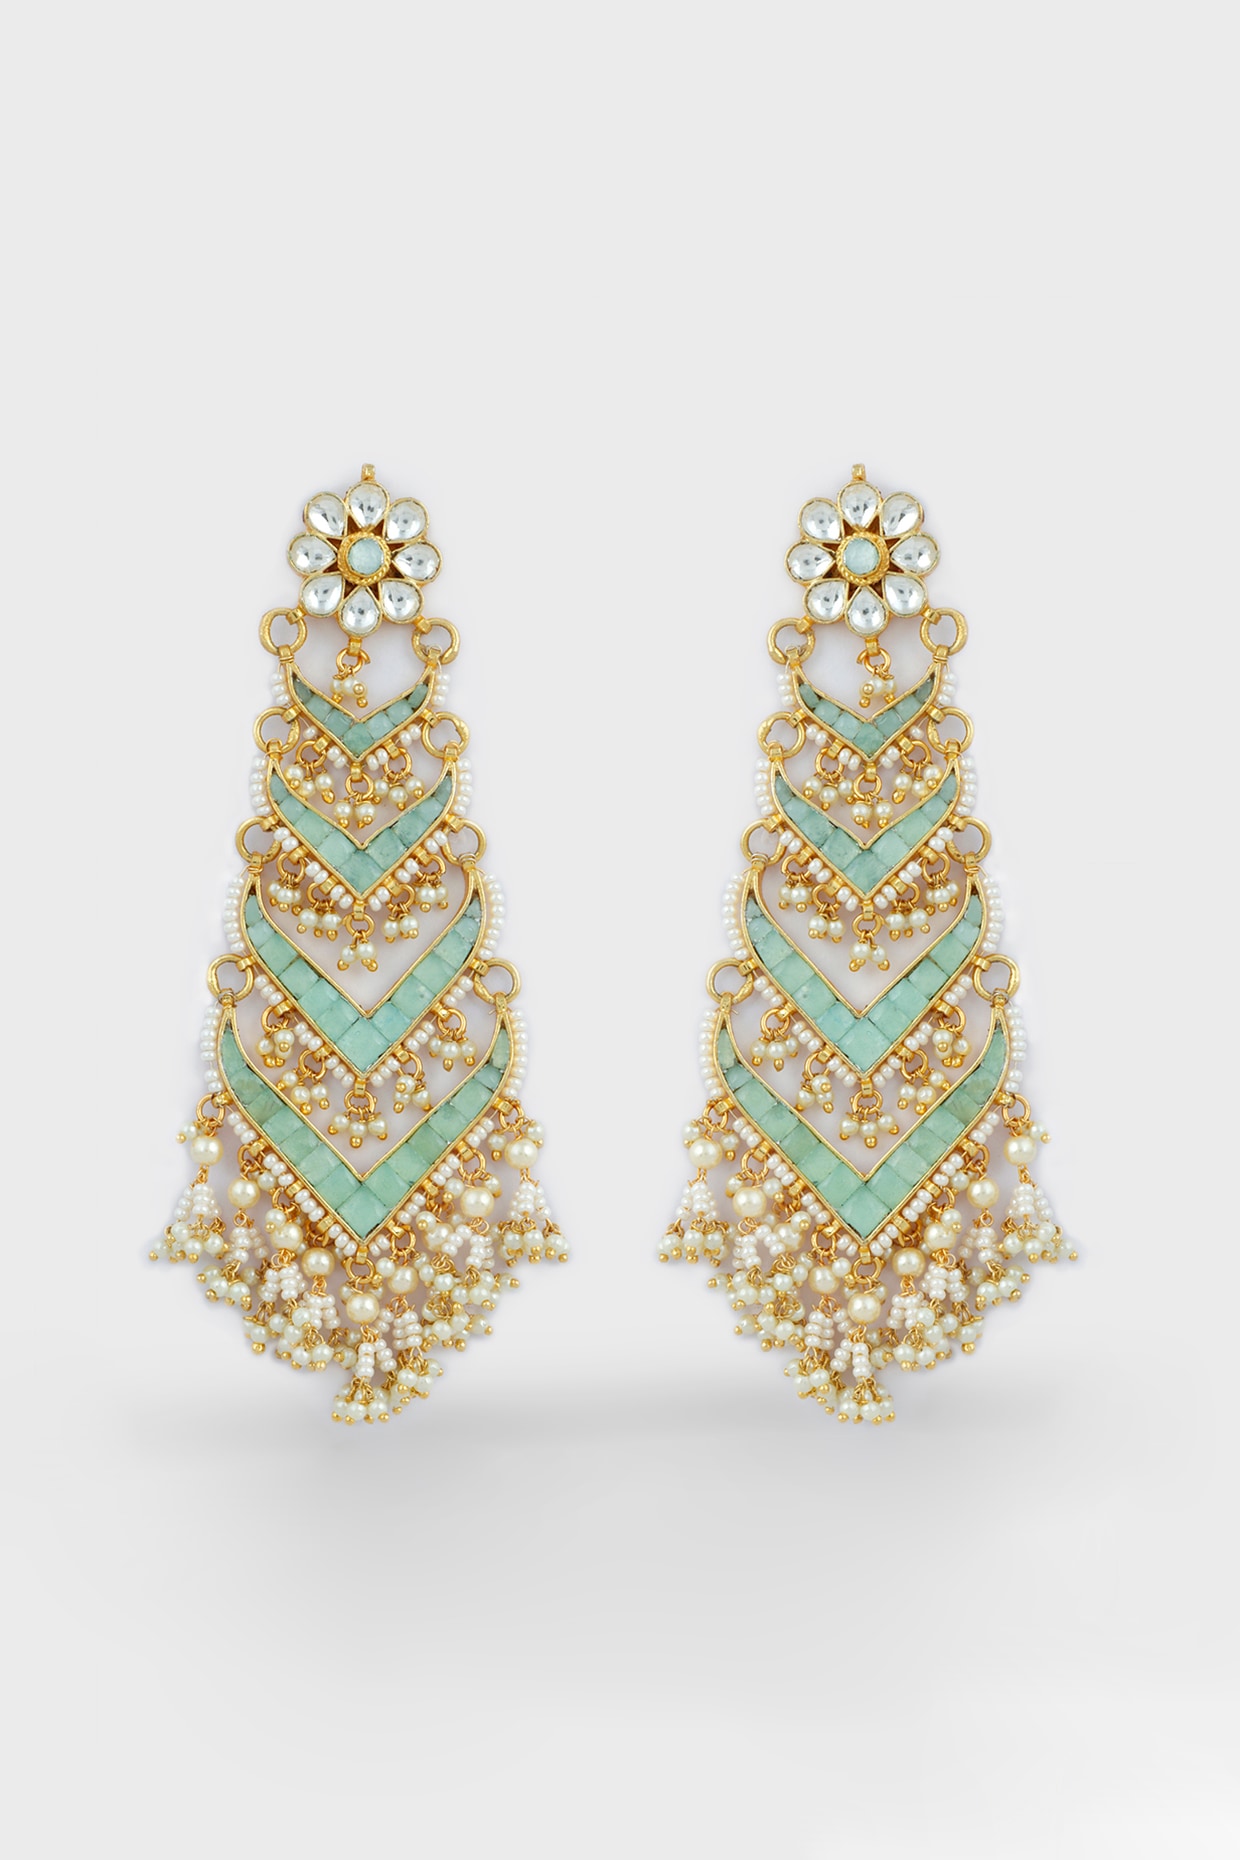 Buy 22k Yellow Gold Earrings Meenakari Stud Earring Indian Jewelry, Vintage  Antique Design Earrings Rajasthani Jewelry Online in India - Etsy